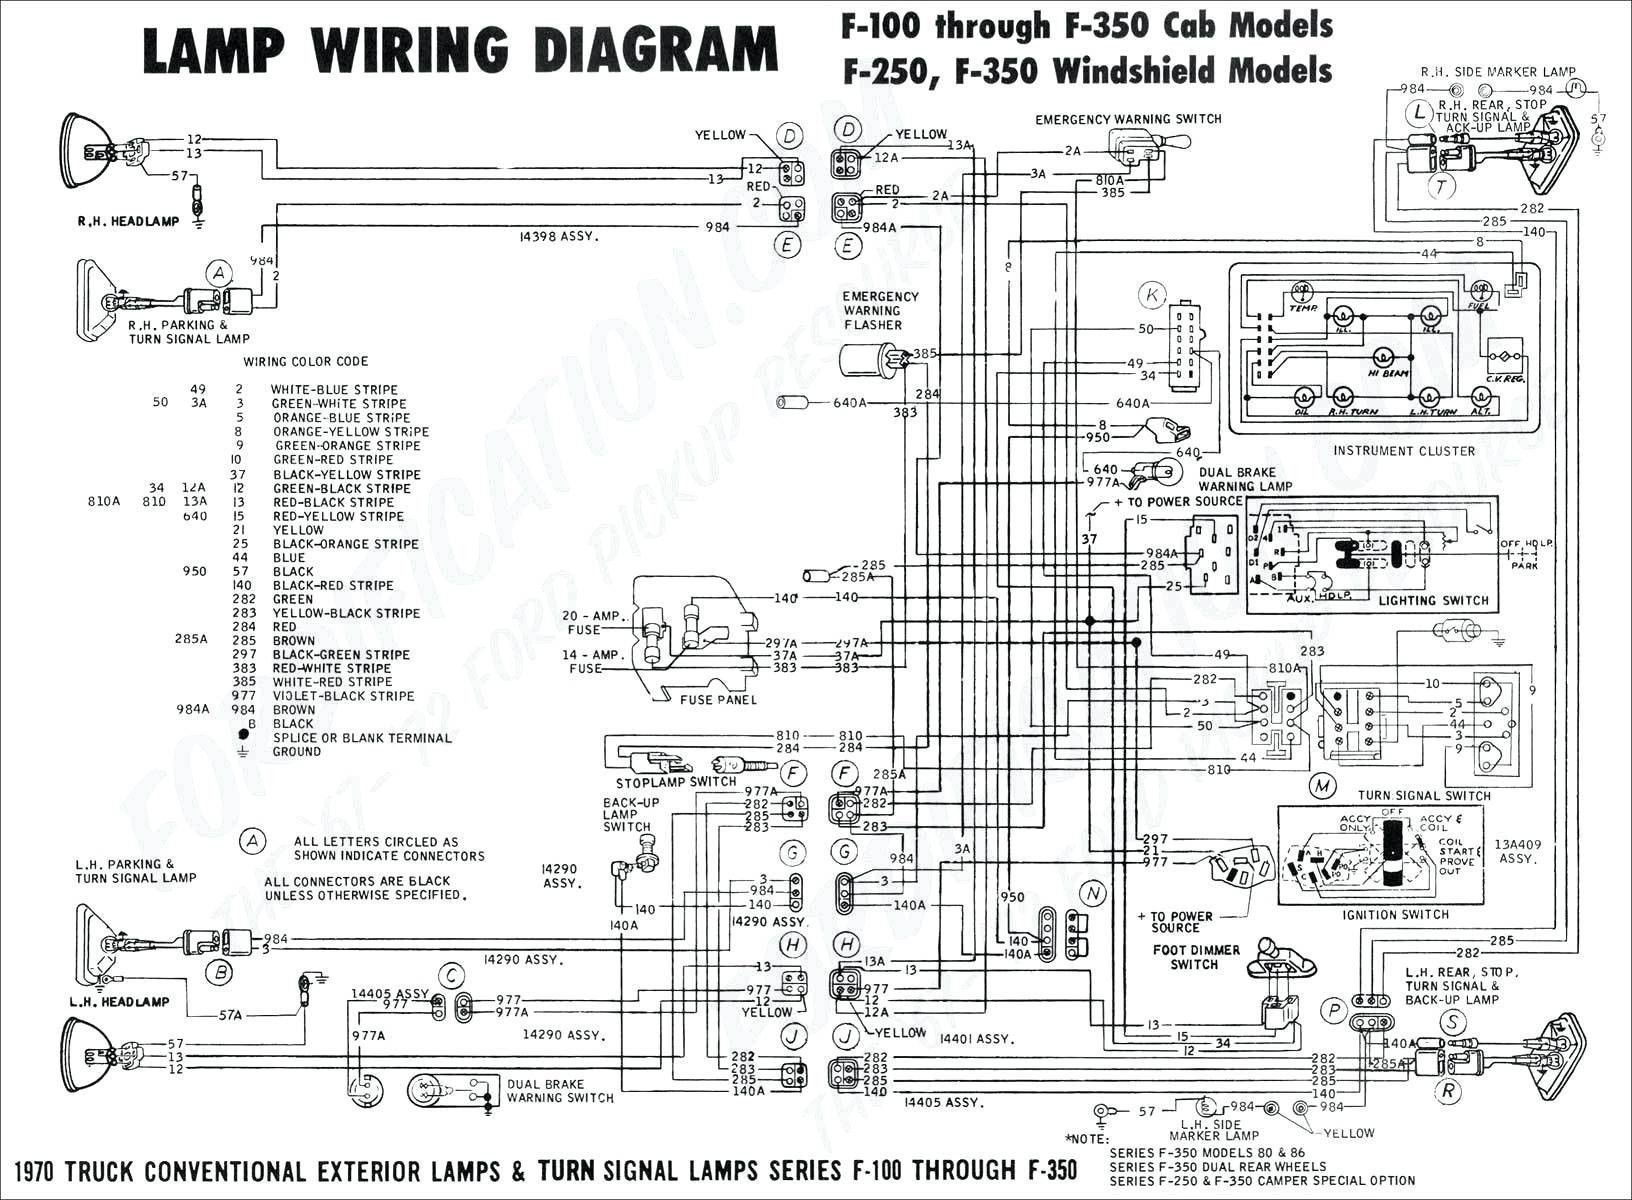 2014 Chevy Cruze Engine Diagram Gm Abs Wiring Diagram Layout Wiring Diagrams • Of 2014 Chevy Cruze Engine Diagram